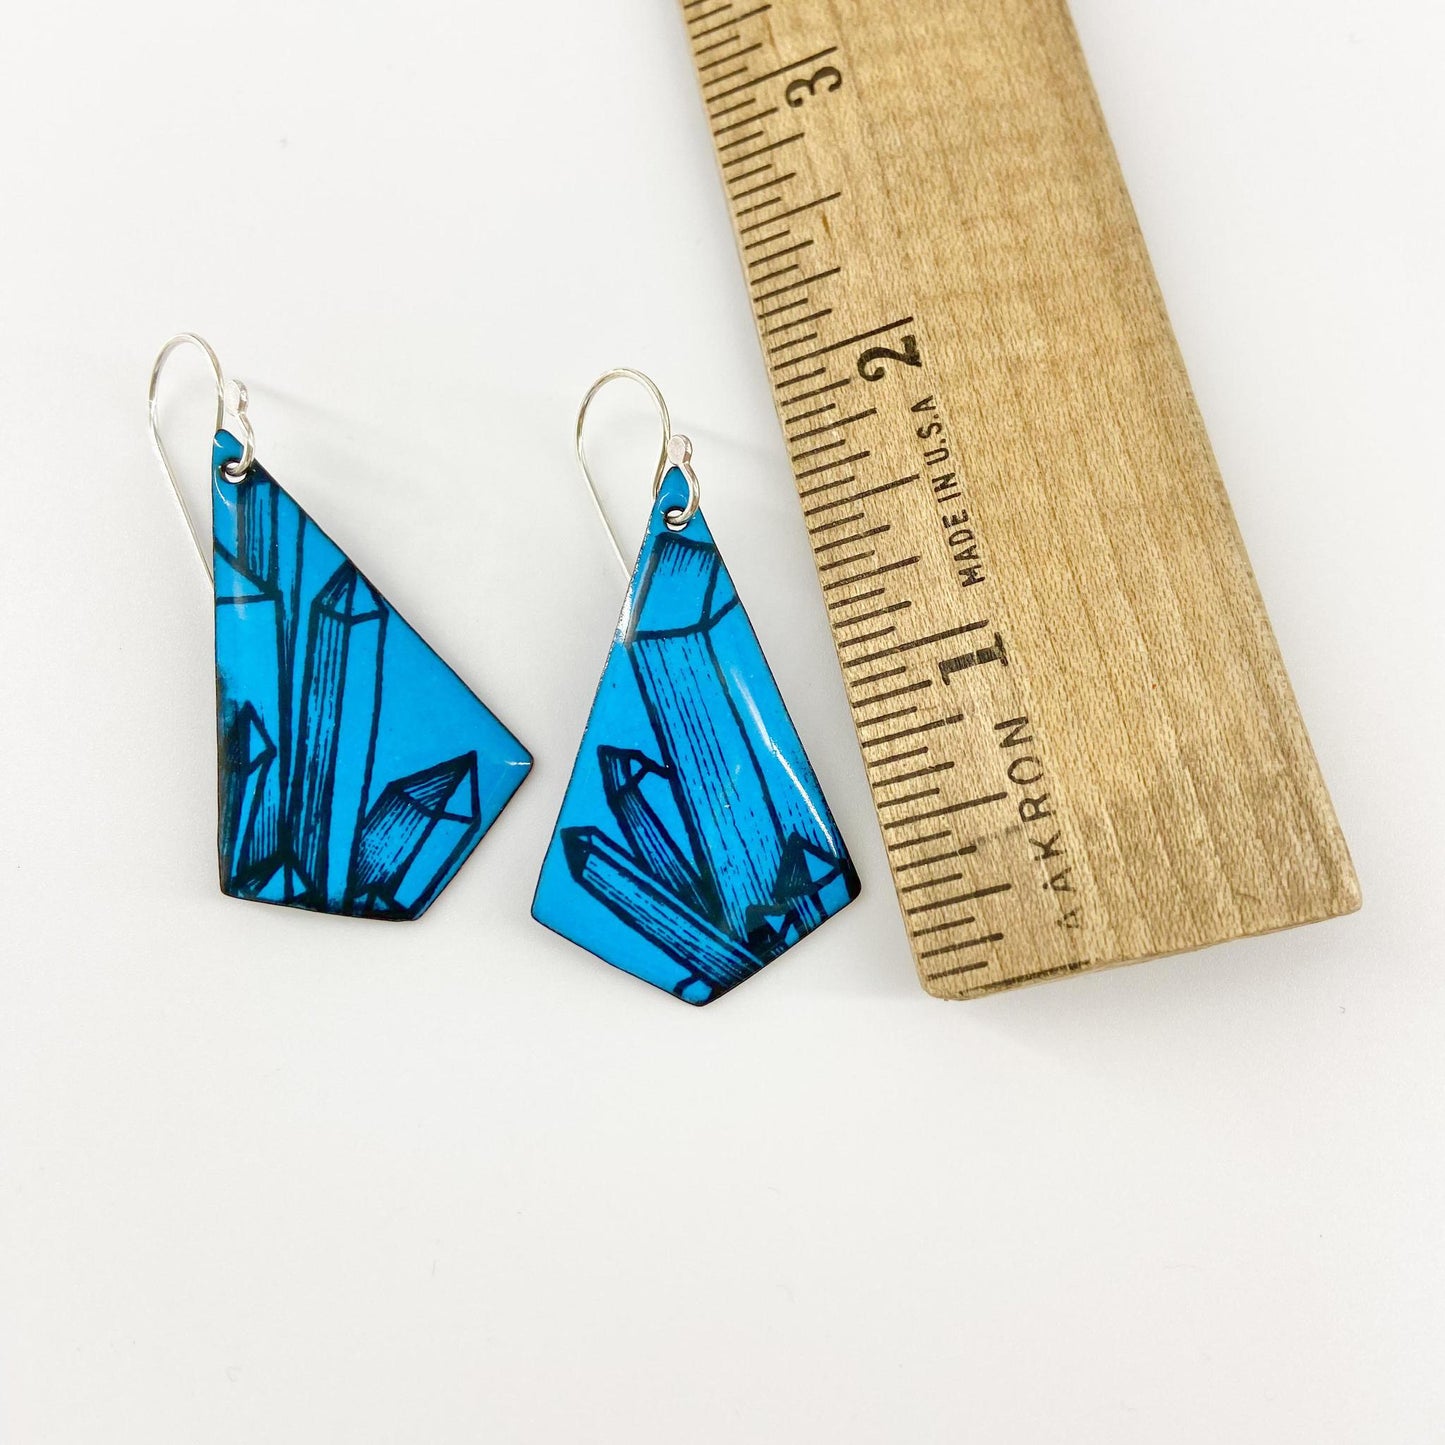 Earrings - Black Crystals on Blue Kites - Enamel on Copper